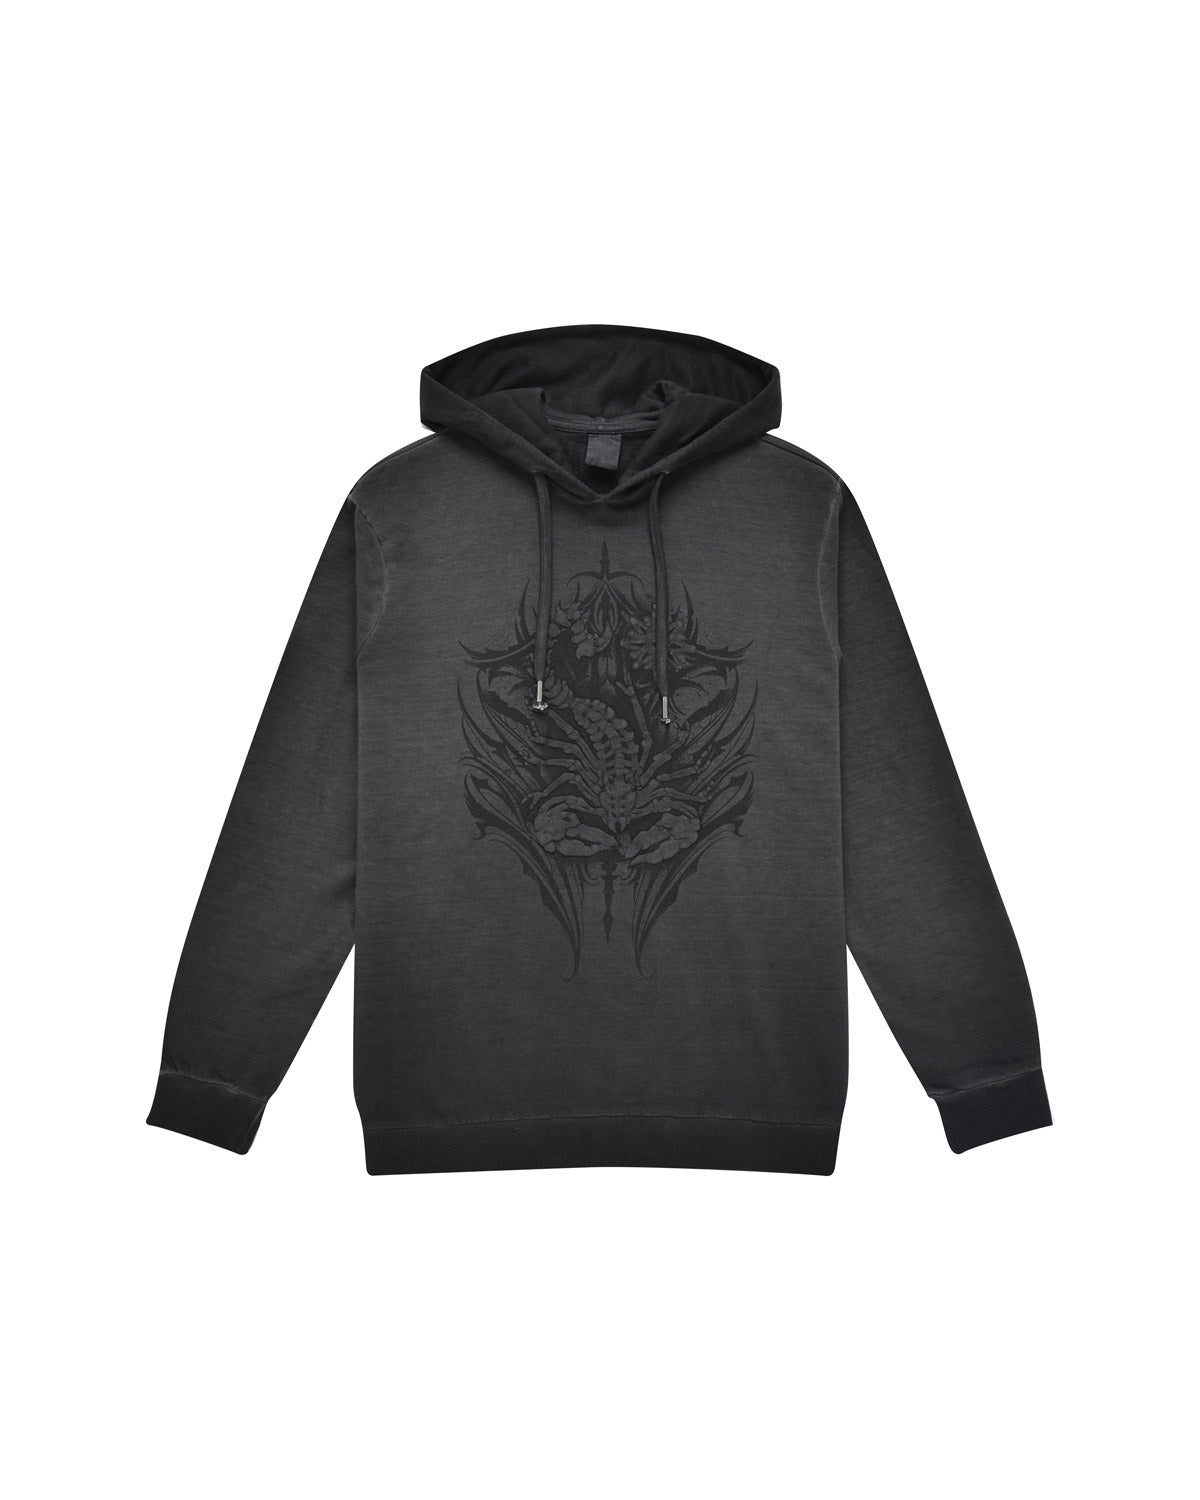 Man | "Tribal Scorpion" Charcoal Hooded Sweatshirt In 100% Cotton